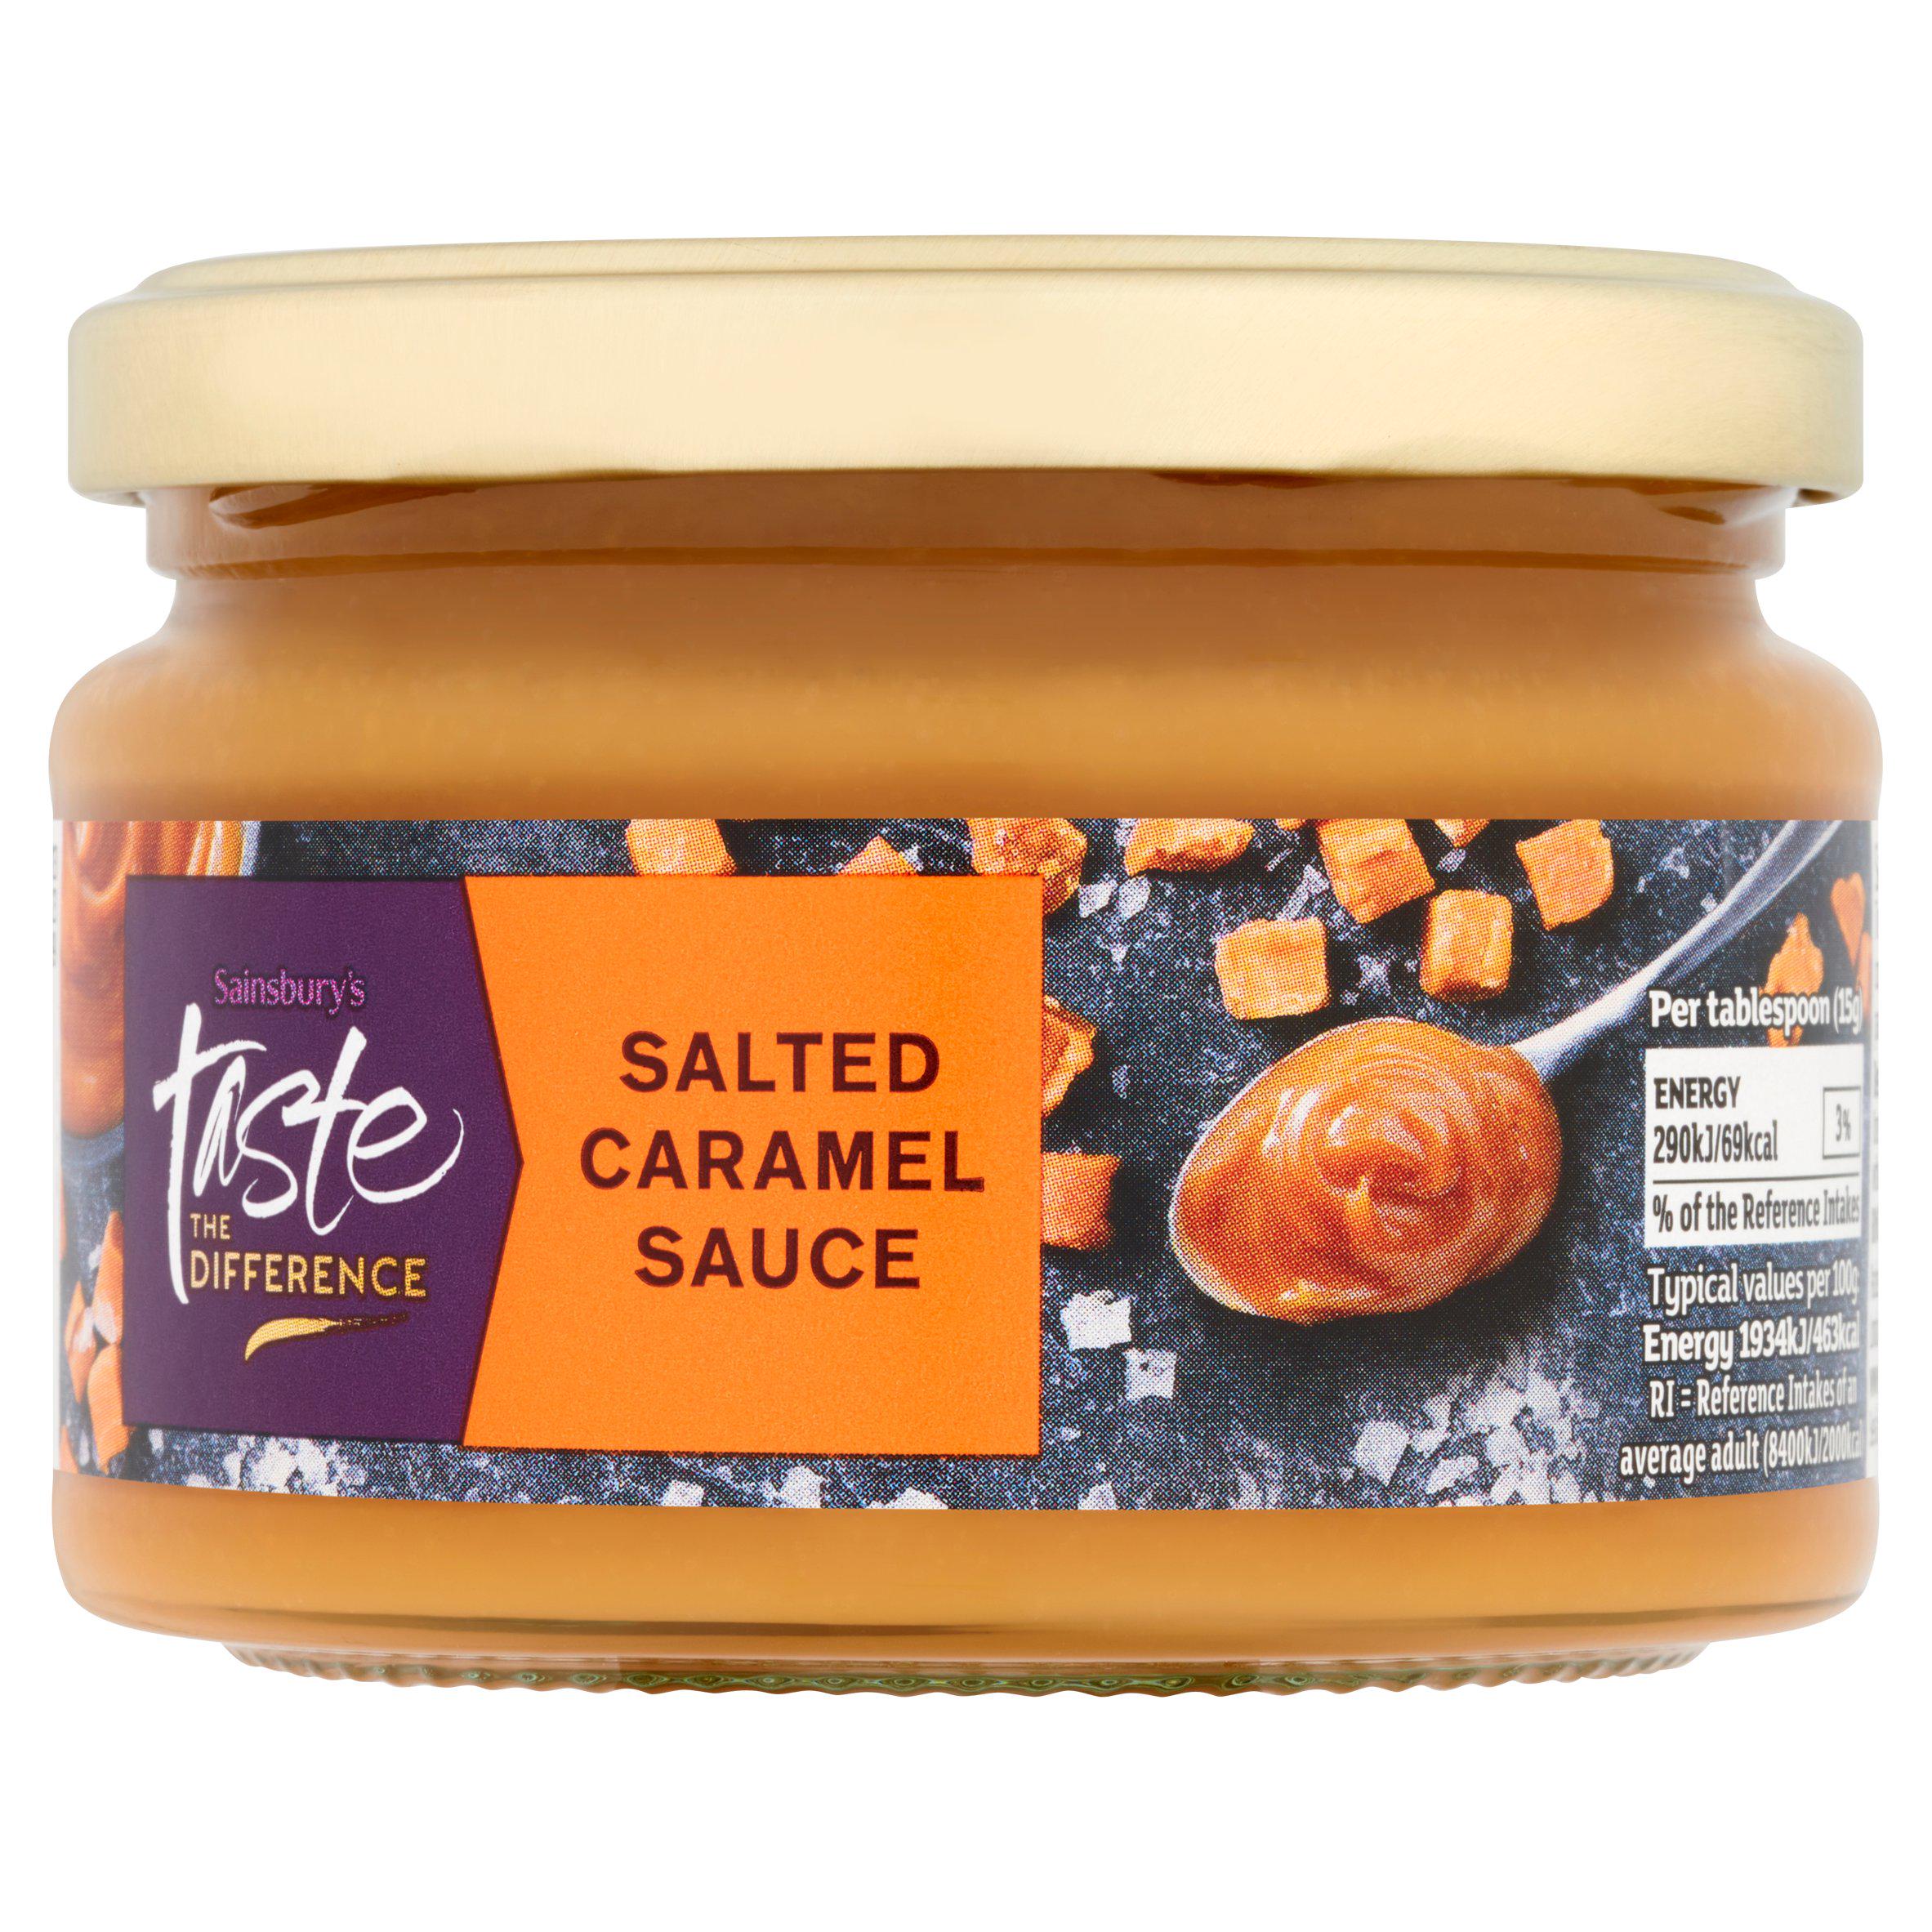 Sainsbury's Salted Caramel Sauce, Taste the Difference 260g Baking Essentials Sainsburys   